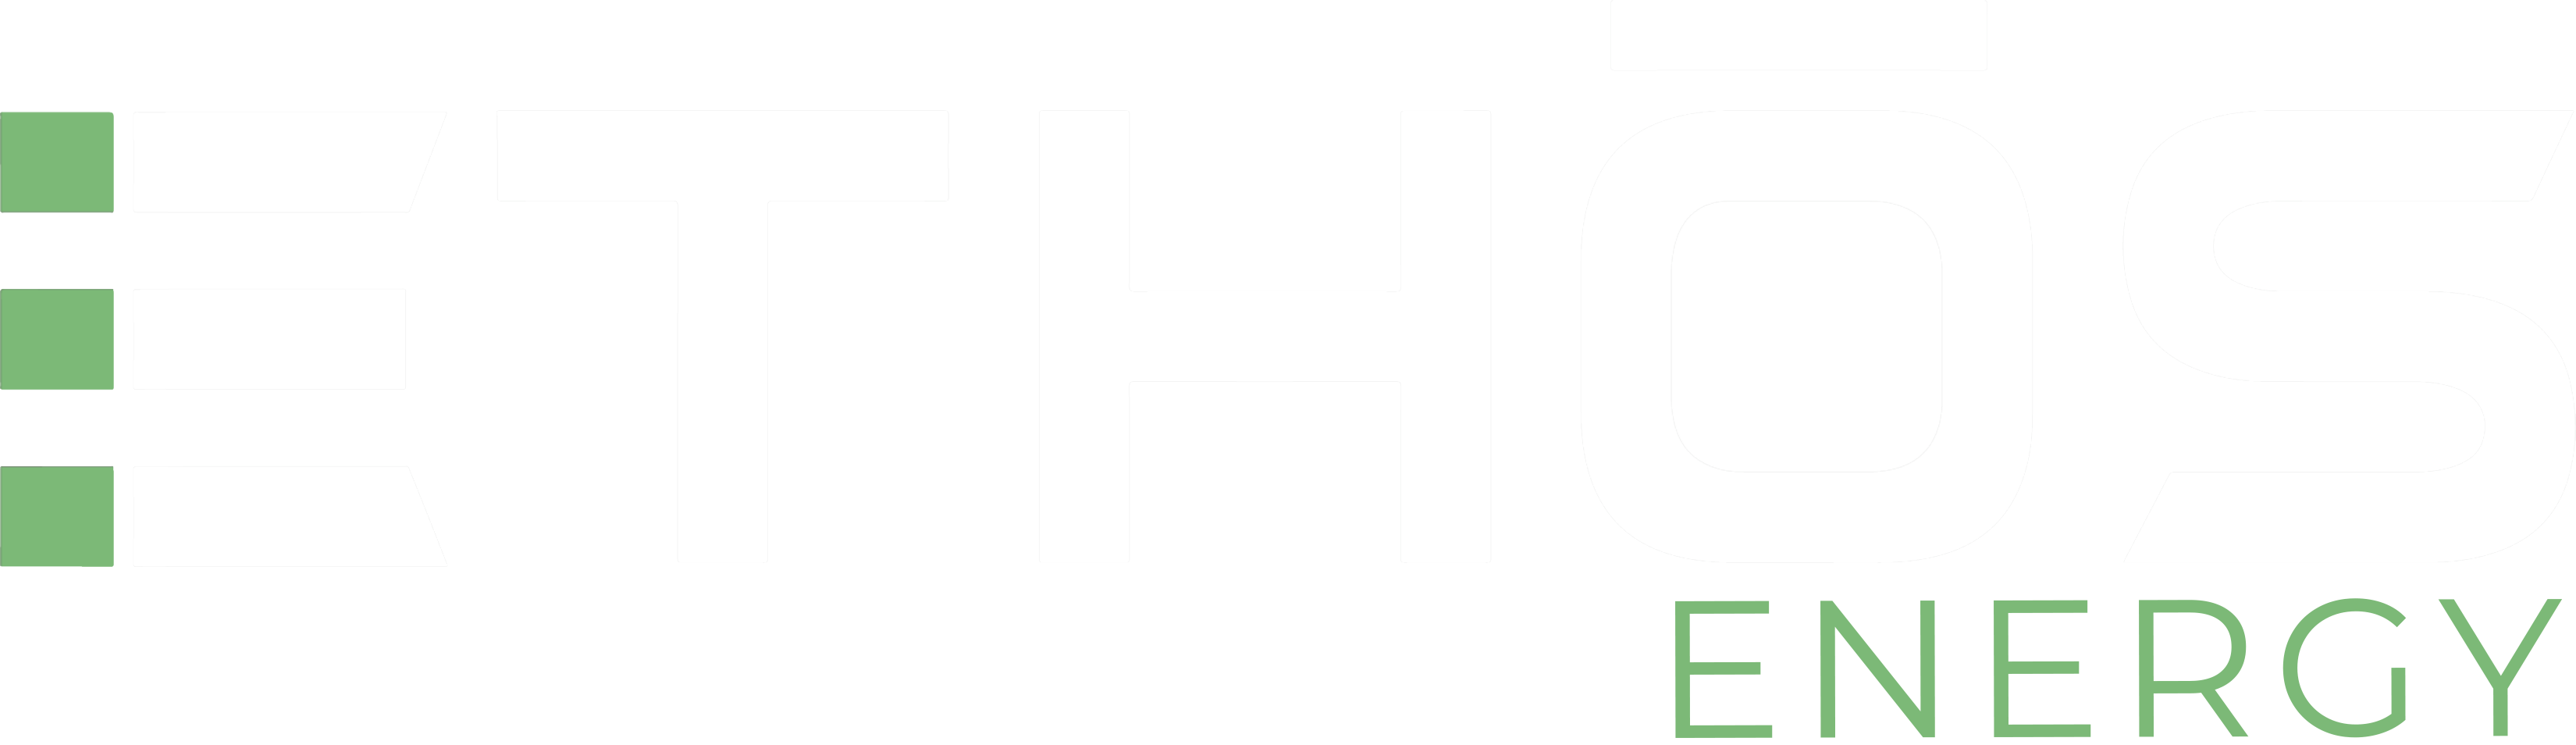 Ethos-Energy-logo-eg